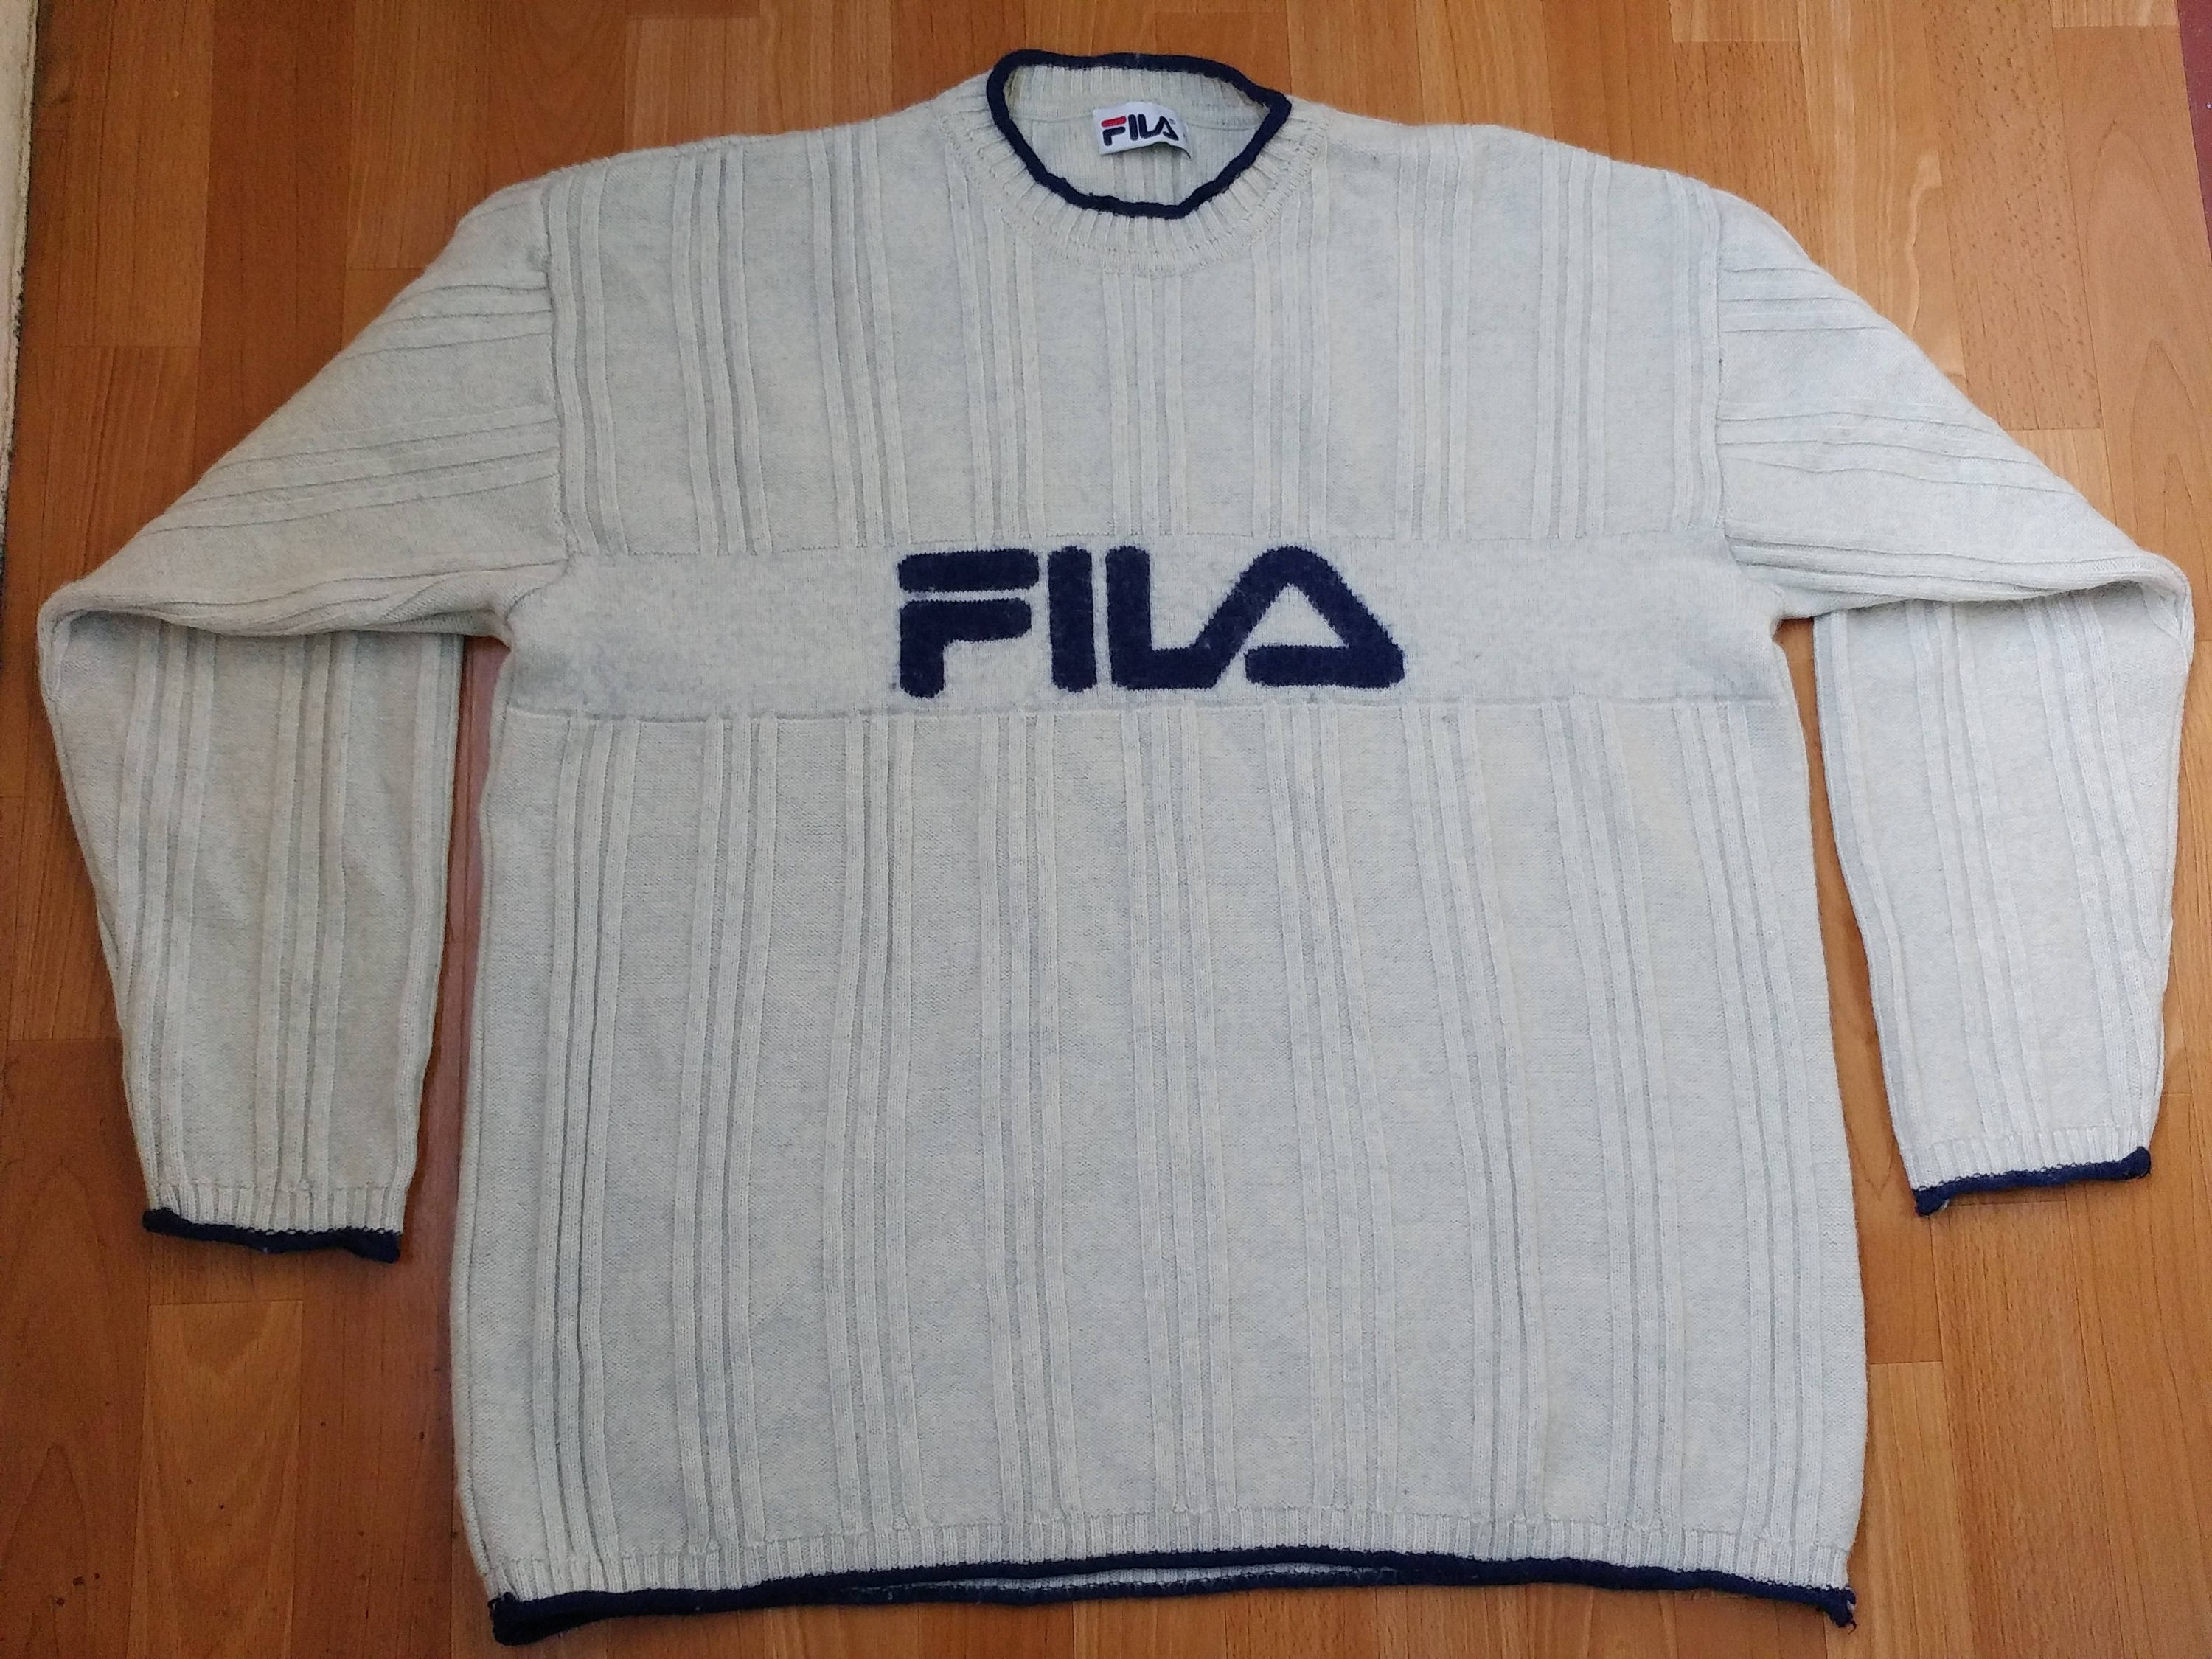 Buy FILA Sweatshirt Vintage White Sweater 90s Hip-hop Clothing Online India - Etsy